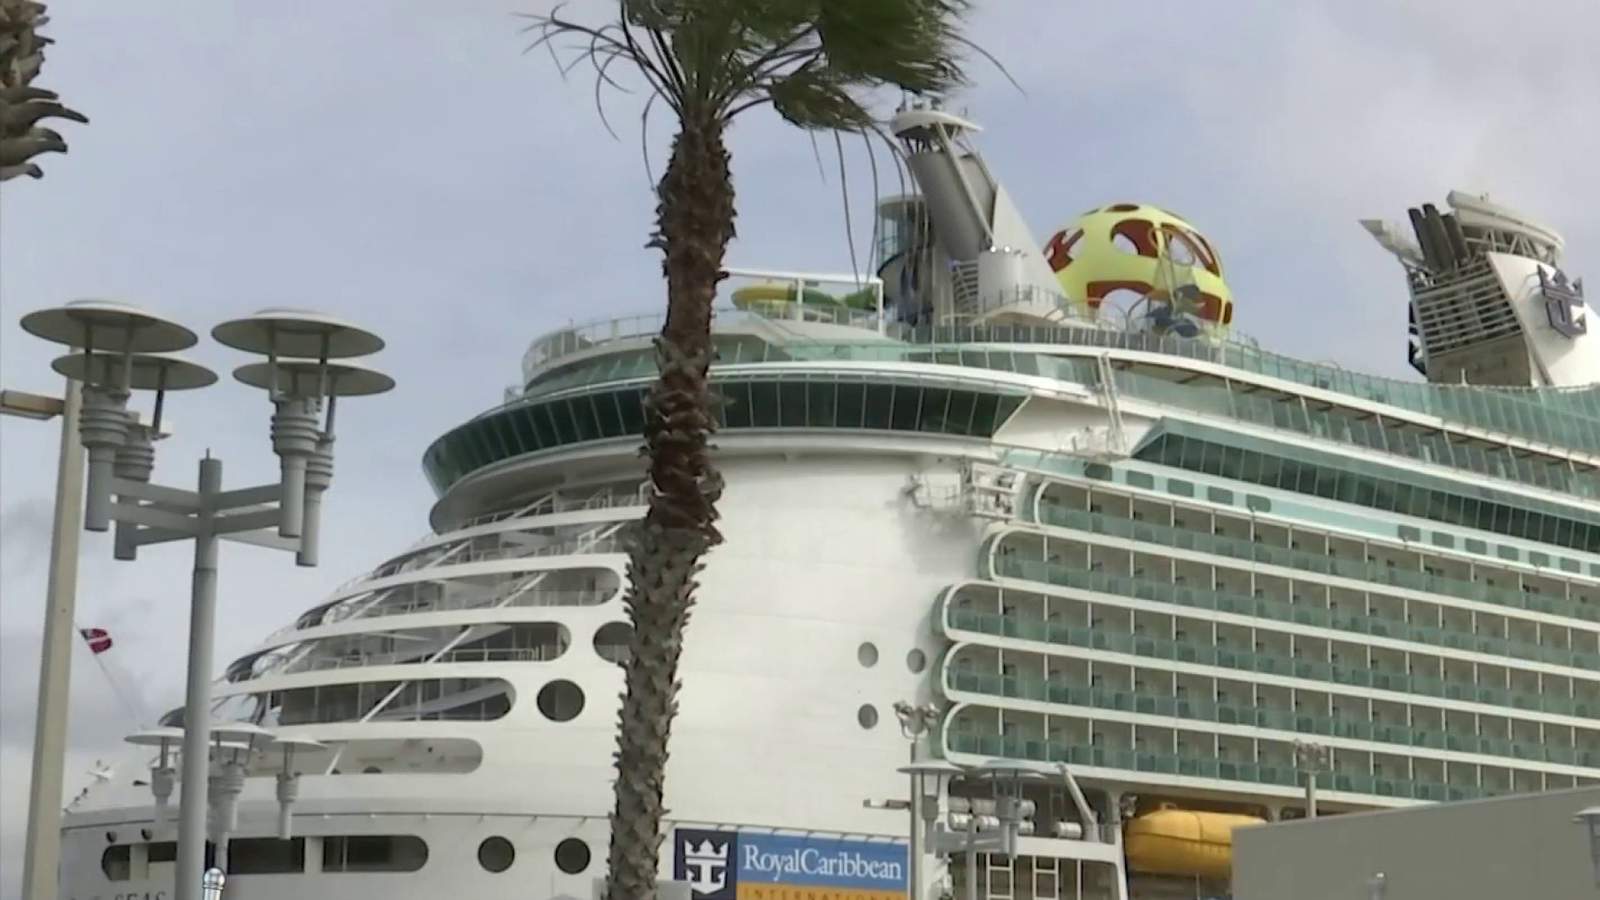 Royal Caribbean hopes to resume cruises by September